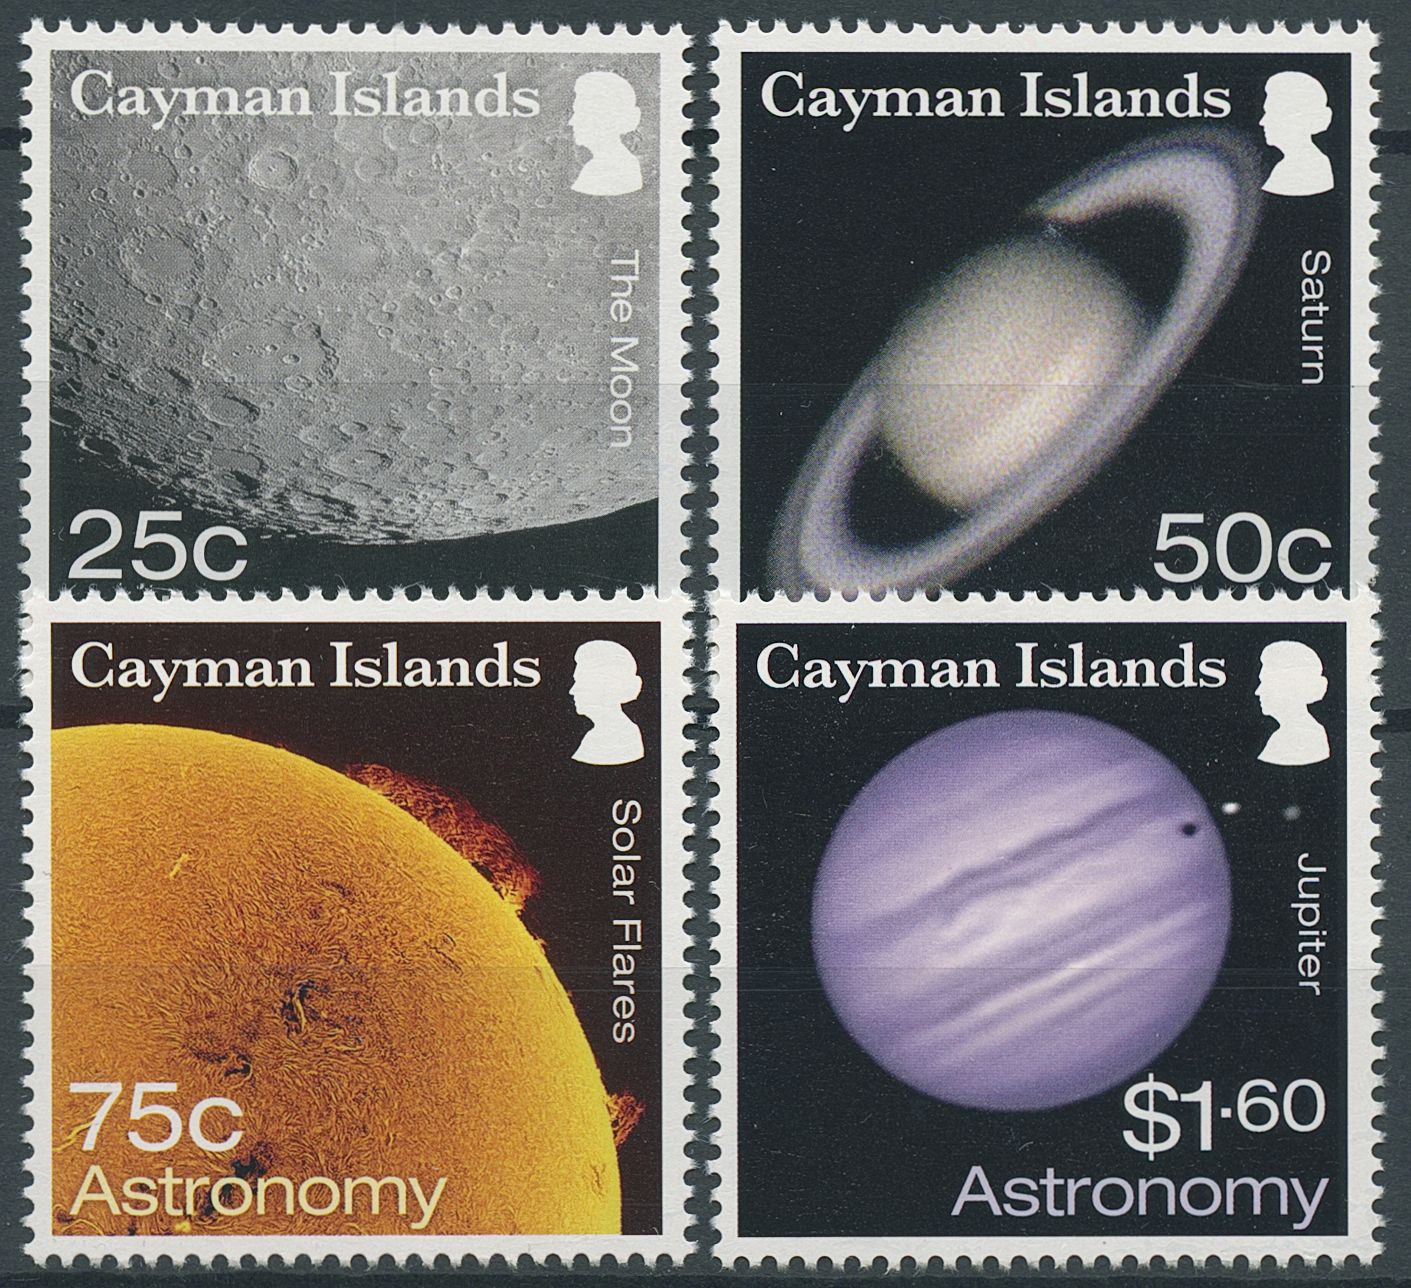 Cayman Islands 2017 MNH Space Stamps Astronomy Planets Jupiter Moon Sun 4v Set